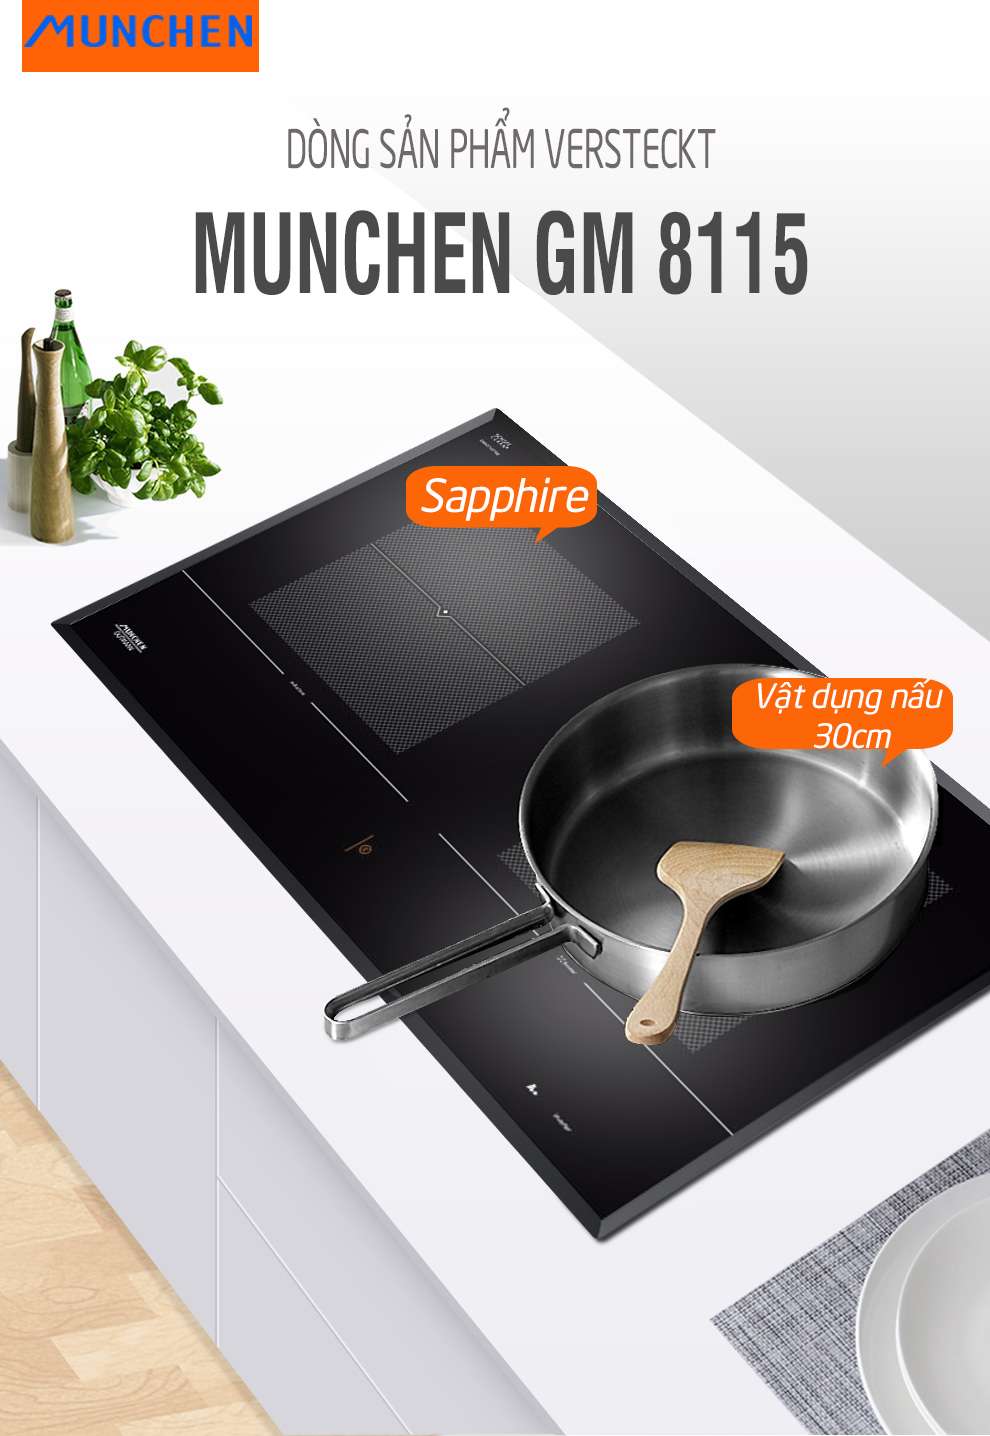 Bếp từ Munchen GM 8115